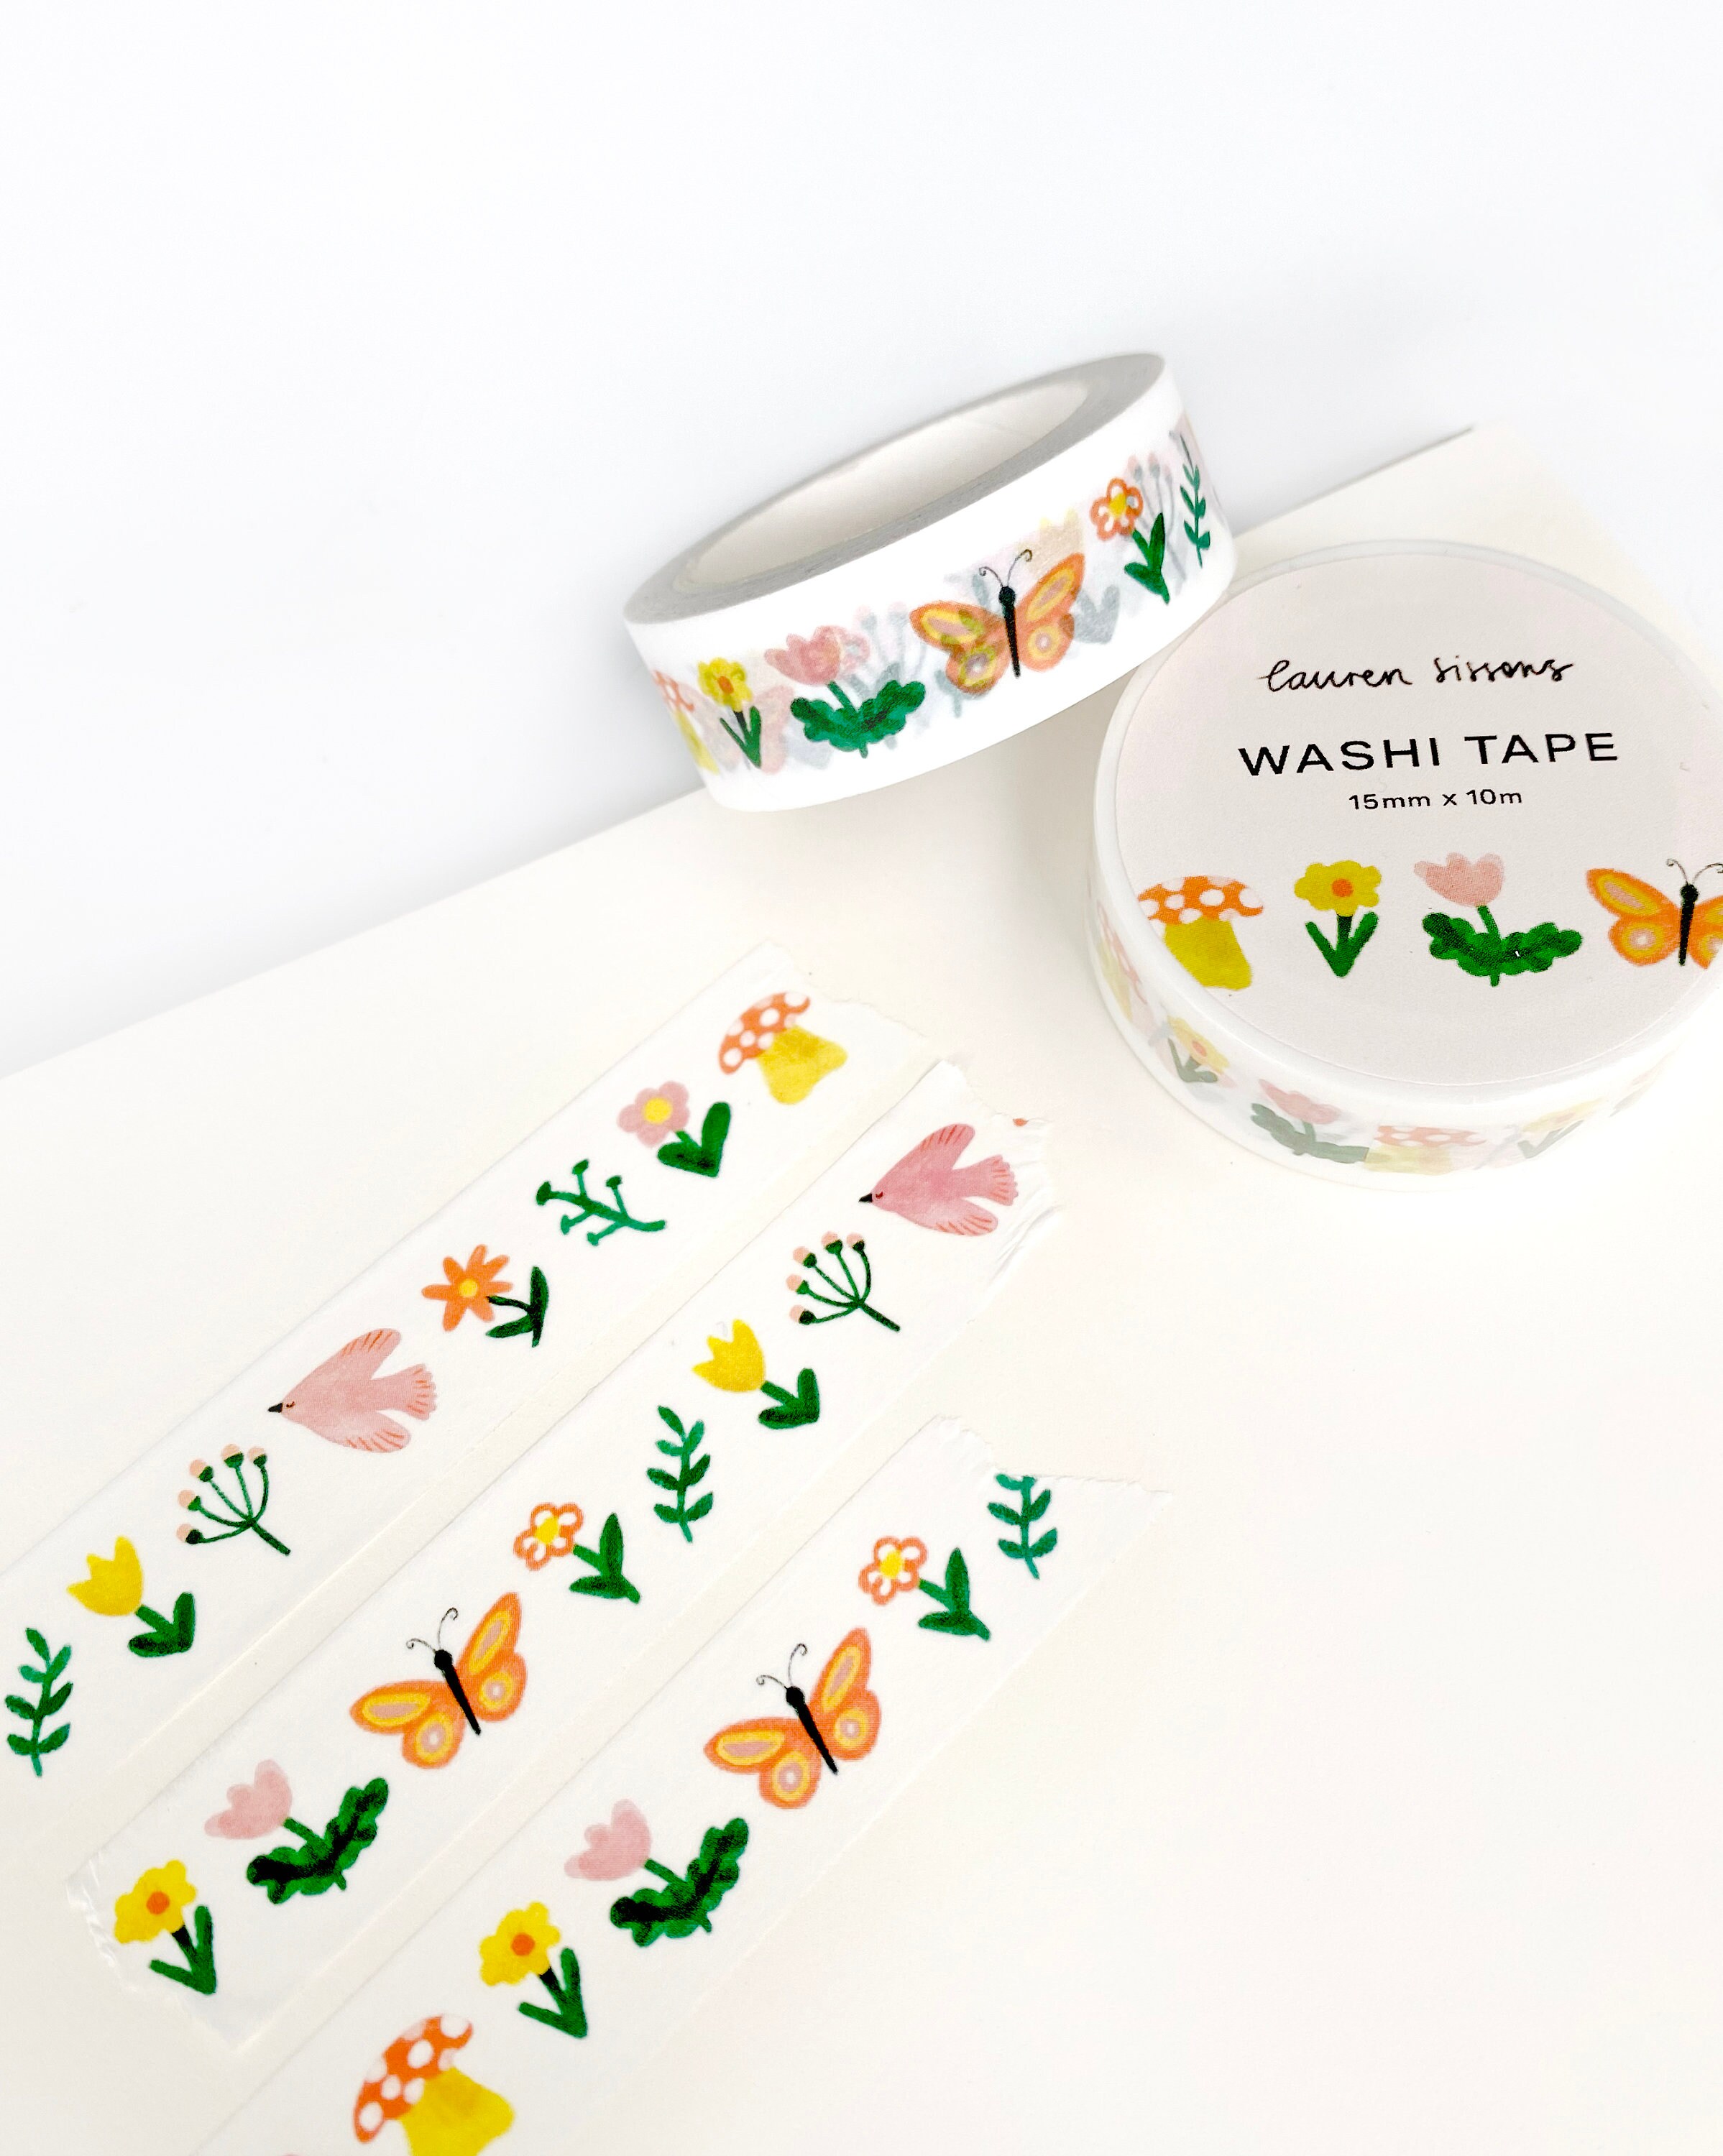 Mushroom Washi Tape, Cute Washi Tape, 10m Washi Tape, Mushie Washi Tape,  Mushroomcore, Paper Tape, Decorative Tape, Masking Tape